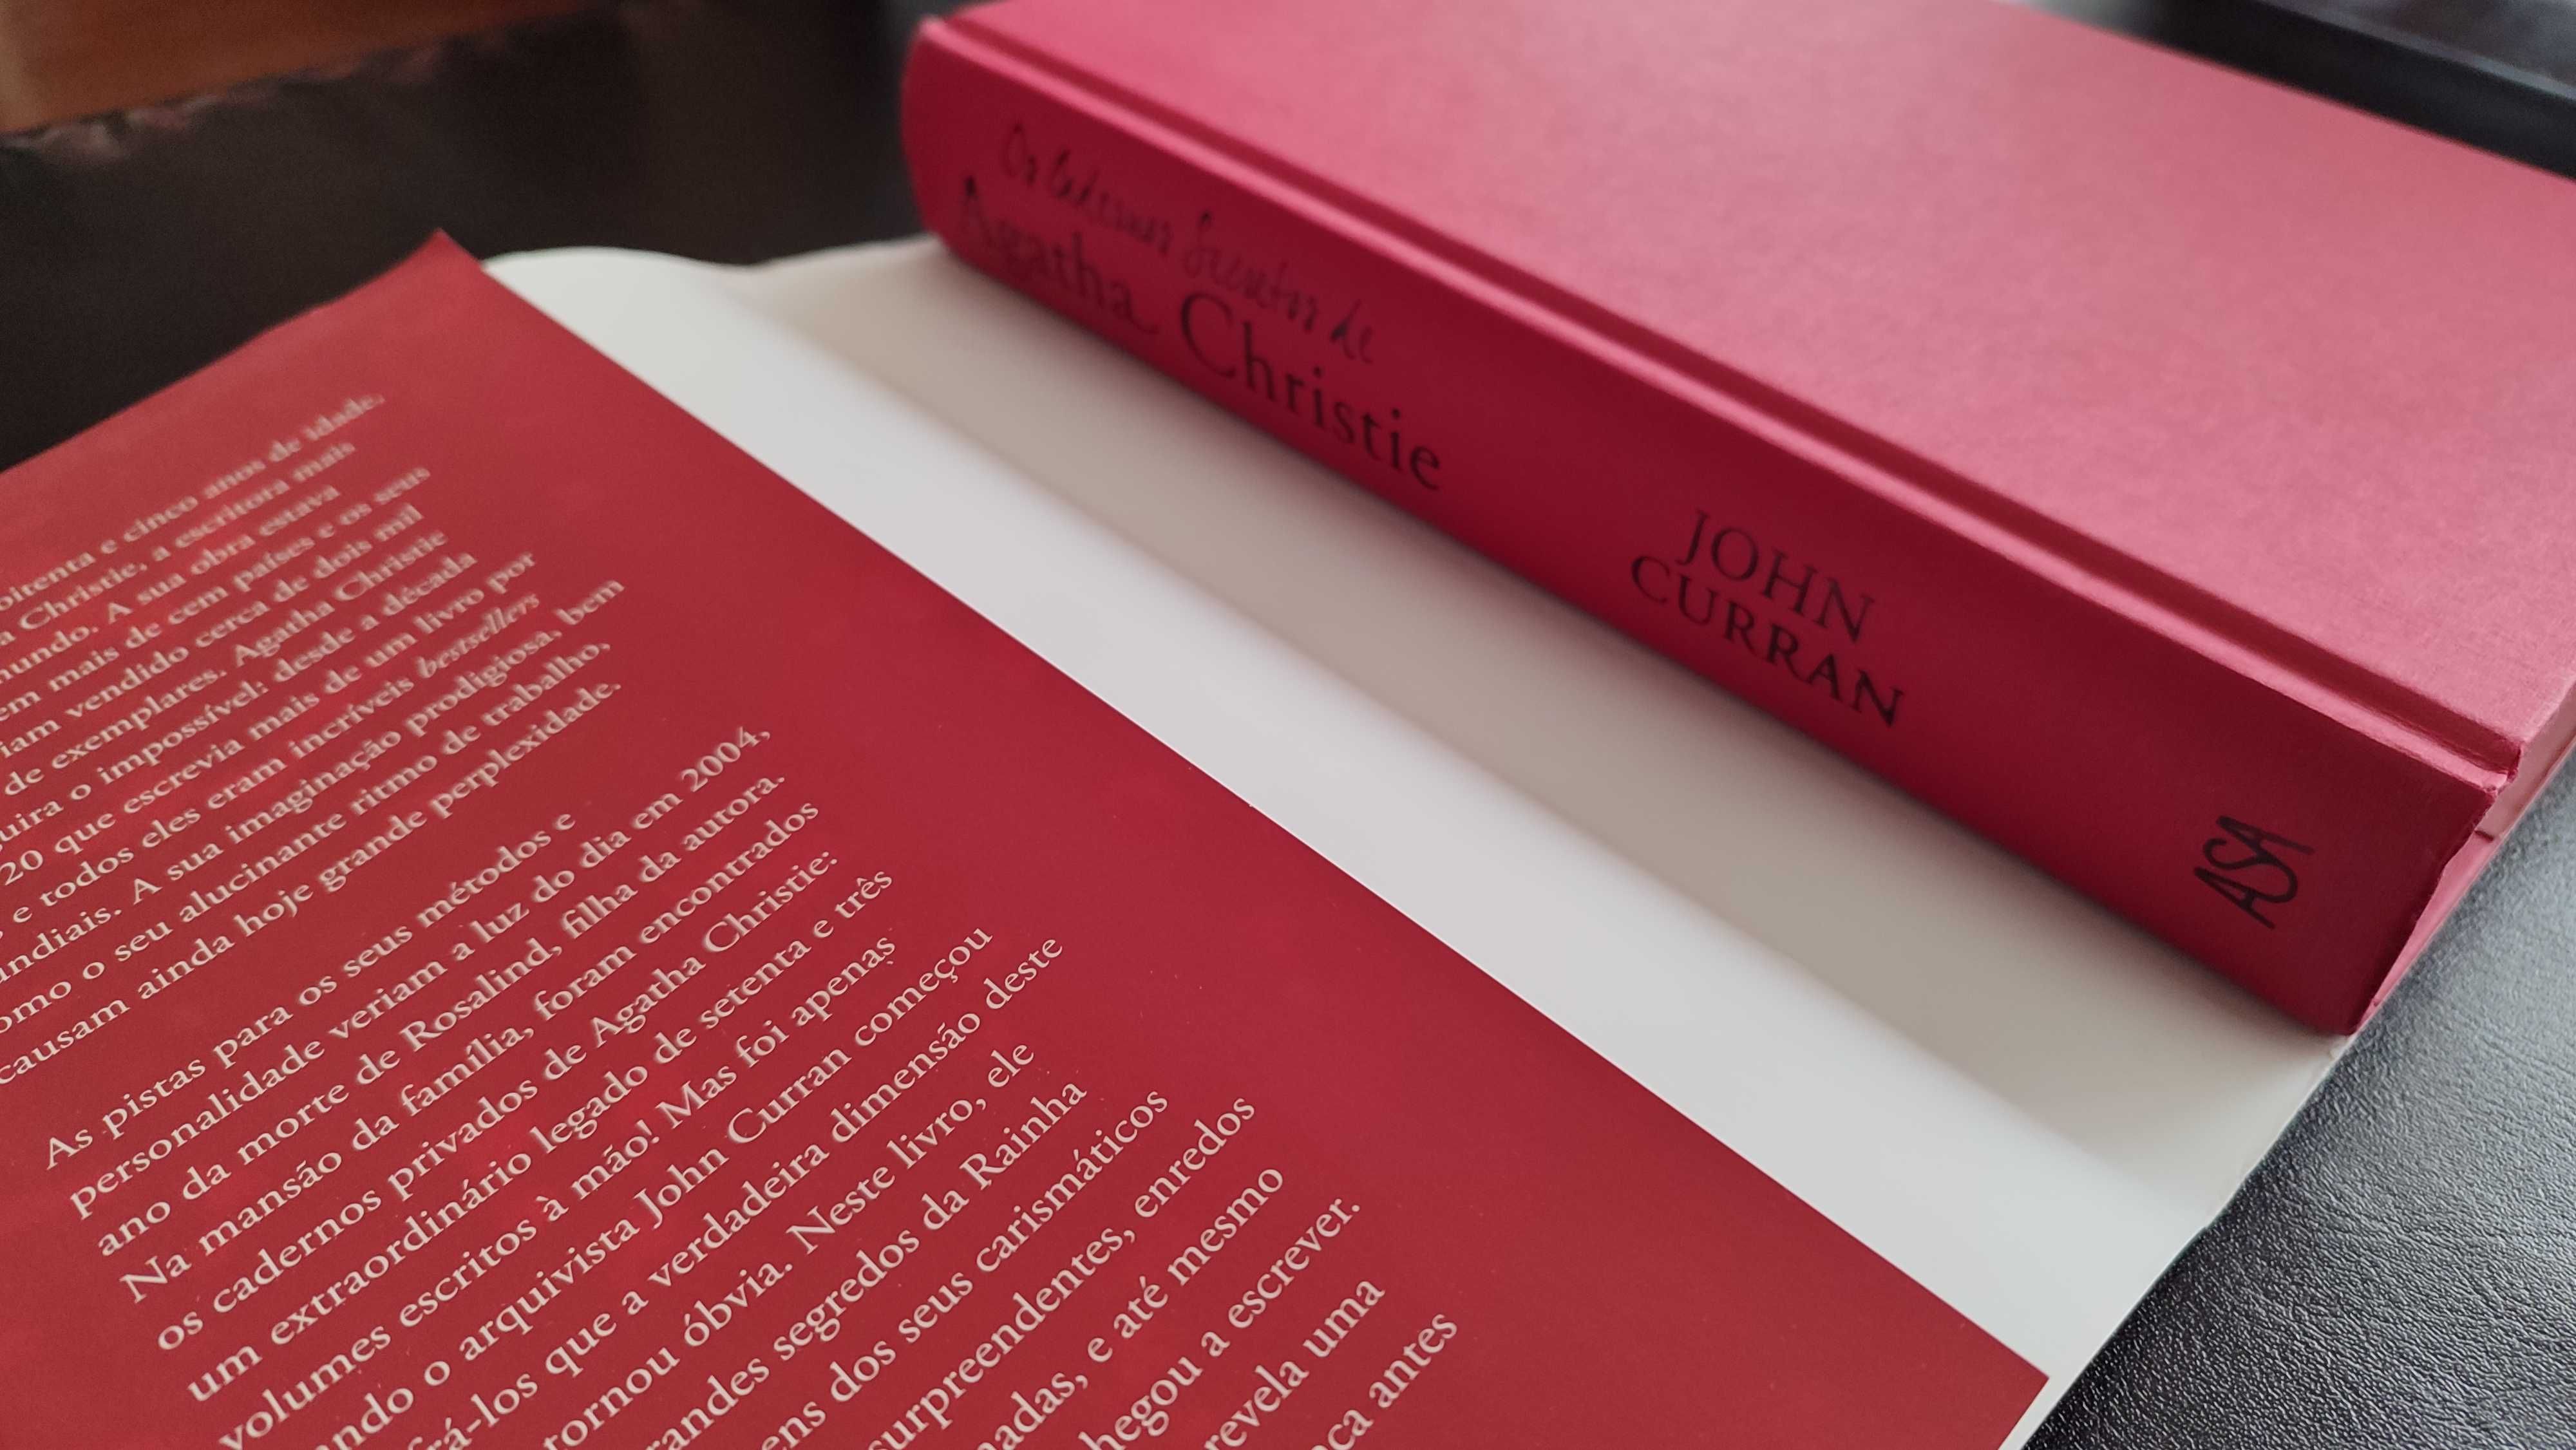 Os Cadernos Secretos de Agatha Christie - Cinquenta Anos de Mistérios